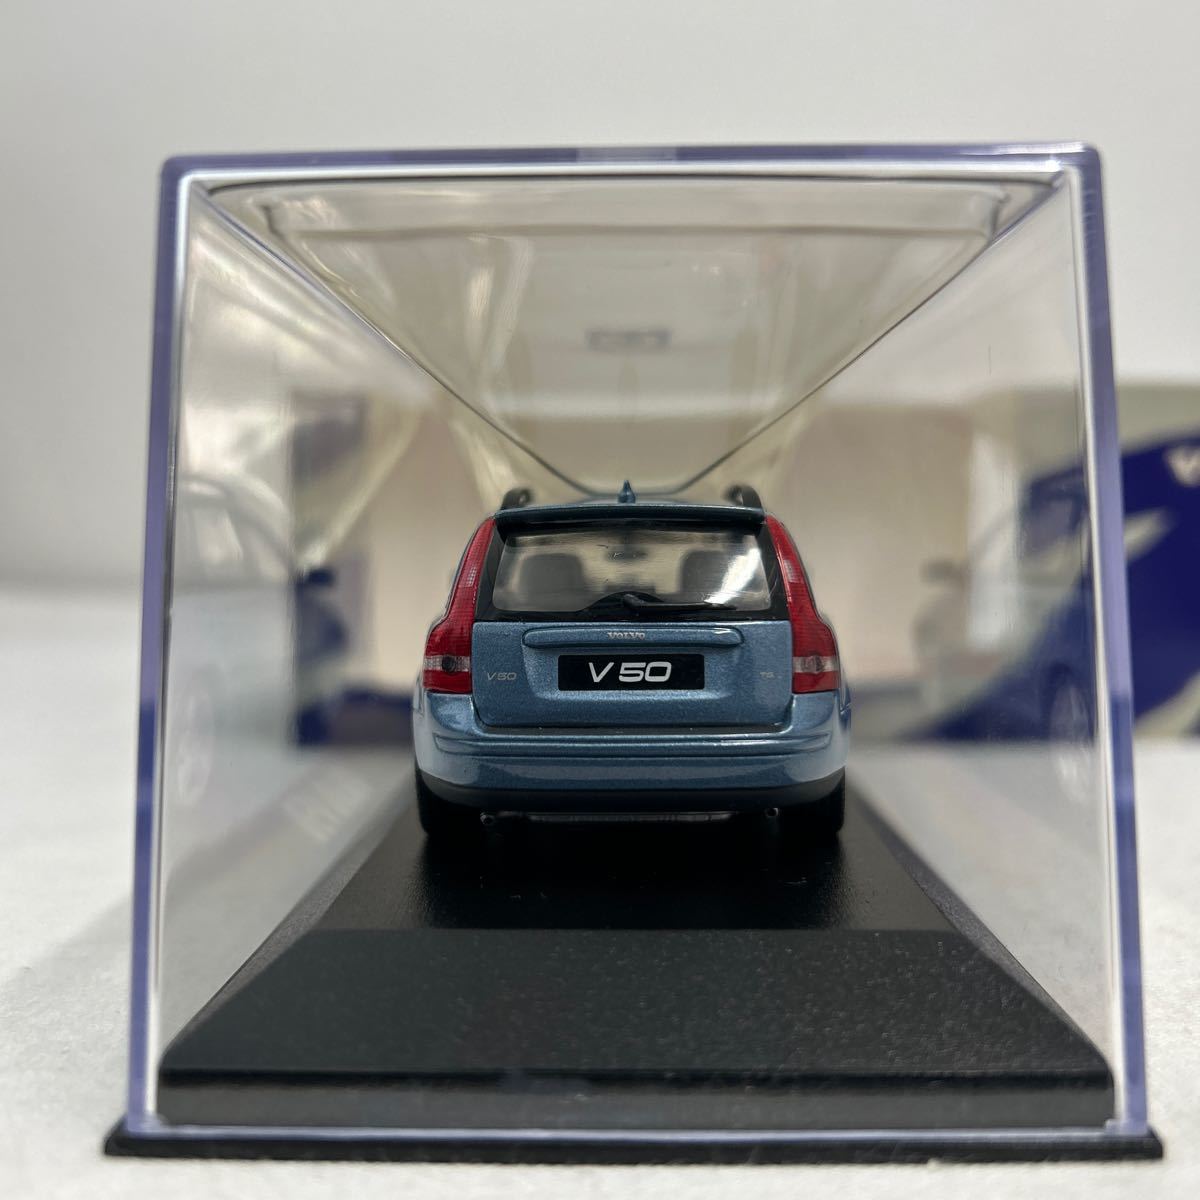 VOLVO дилер специальный заказ PMA Collectors Model 1/43 Volvo V50 2003 голубой MINICHAMPS Minichamps миникар модель машина 